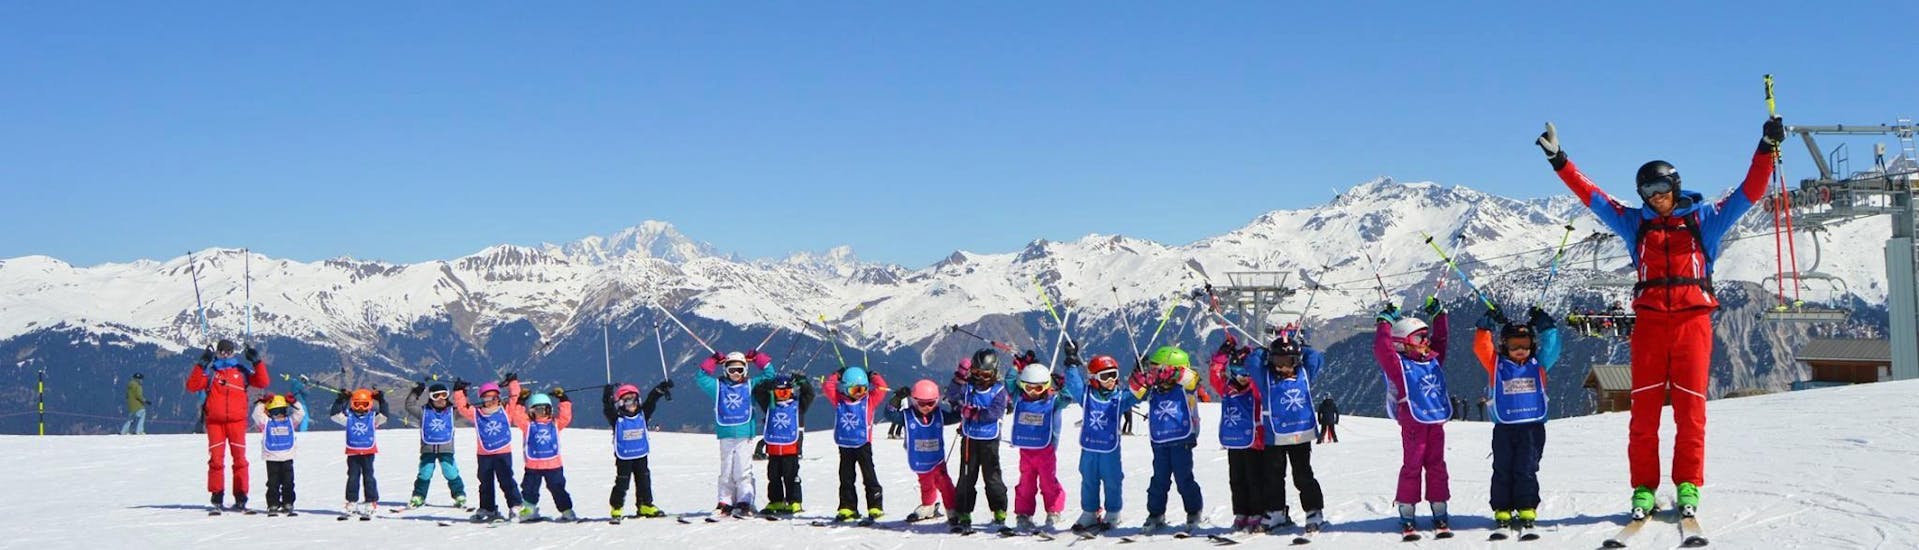 kids-ski-lessons-esf-courchevel-village-hero